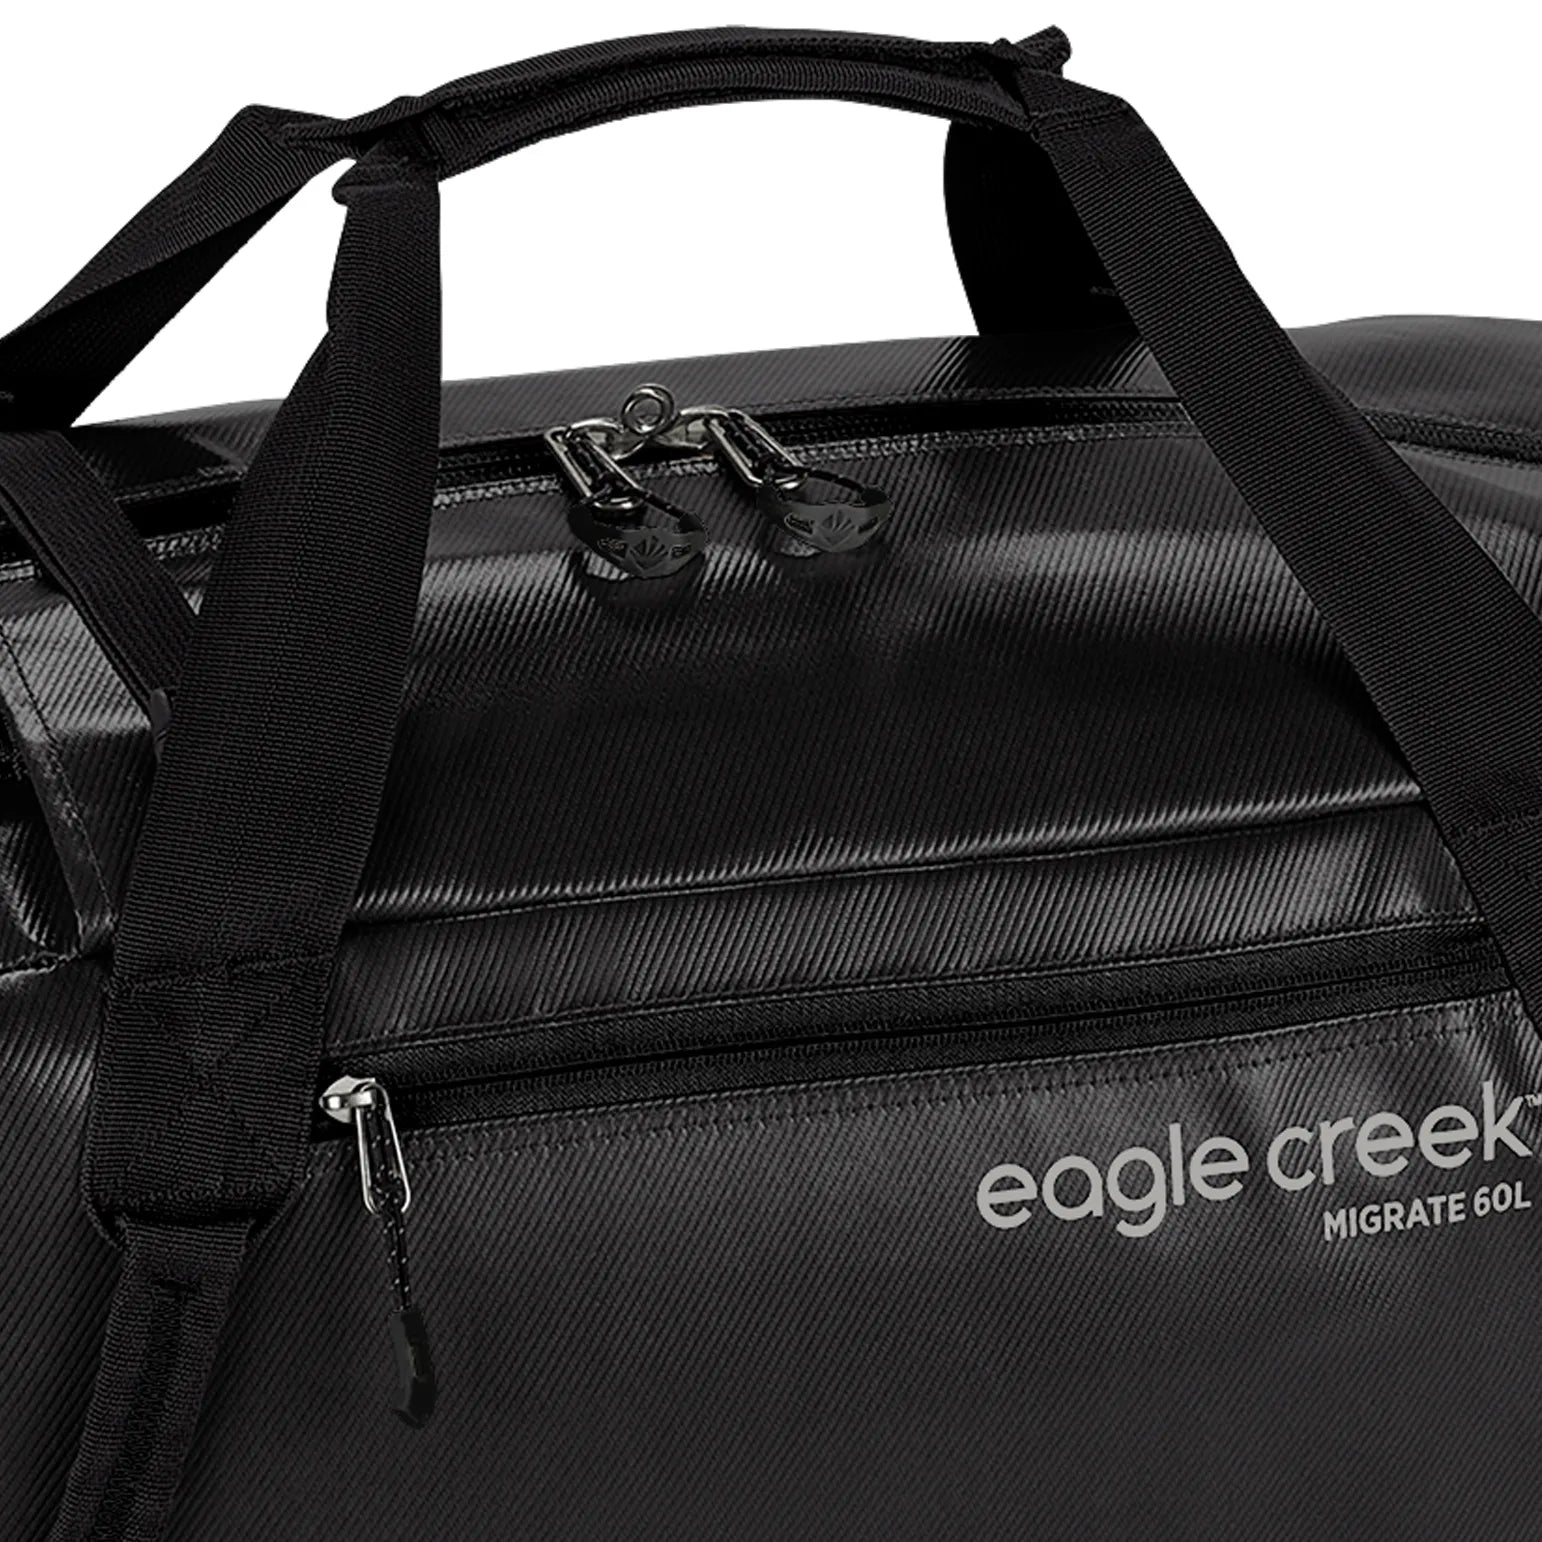 Eagle Creek Migrate Reisetasche 59 cm - black